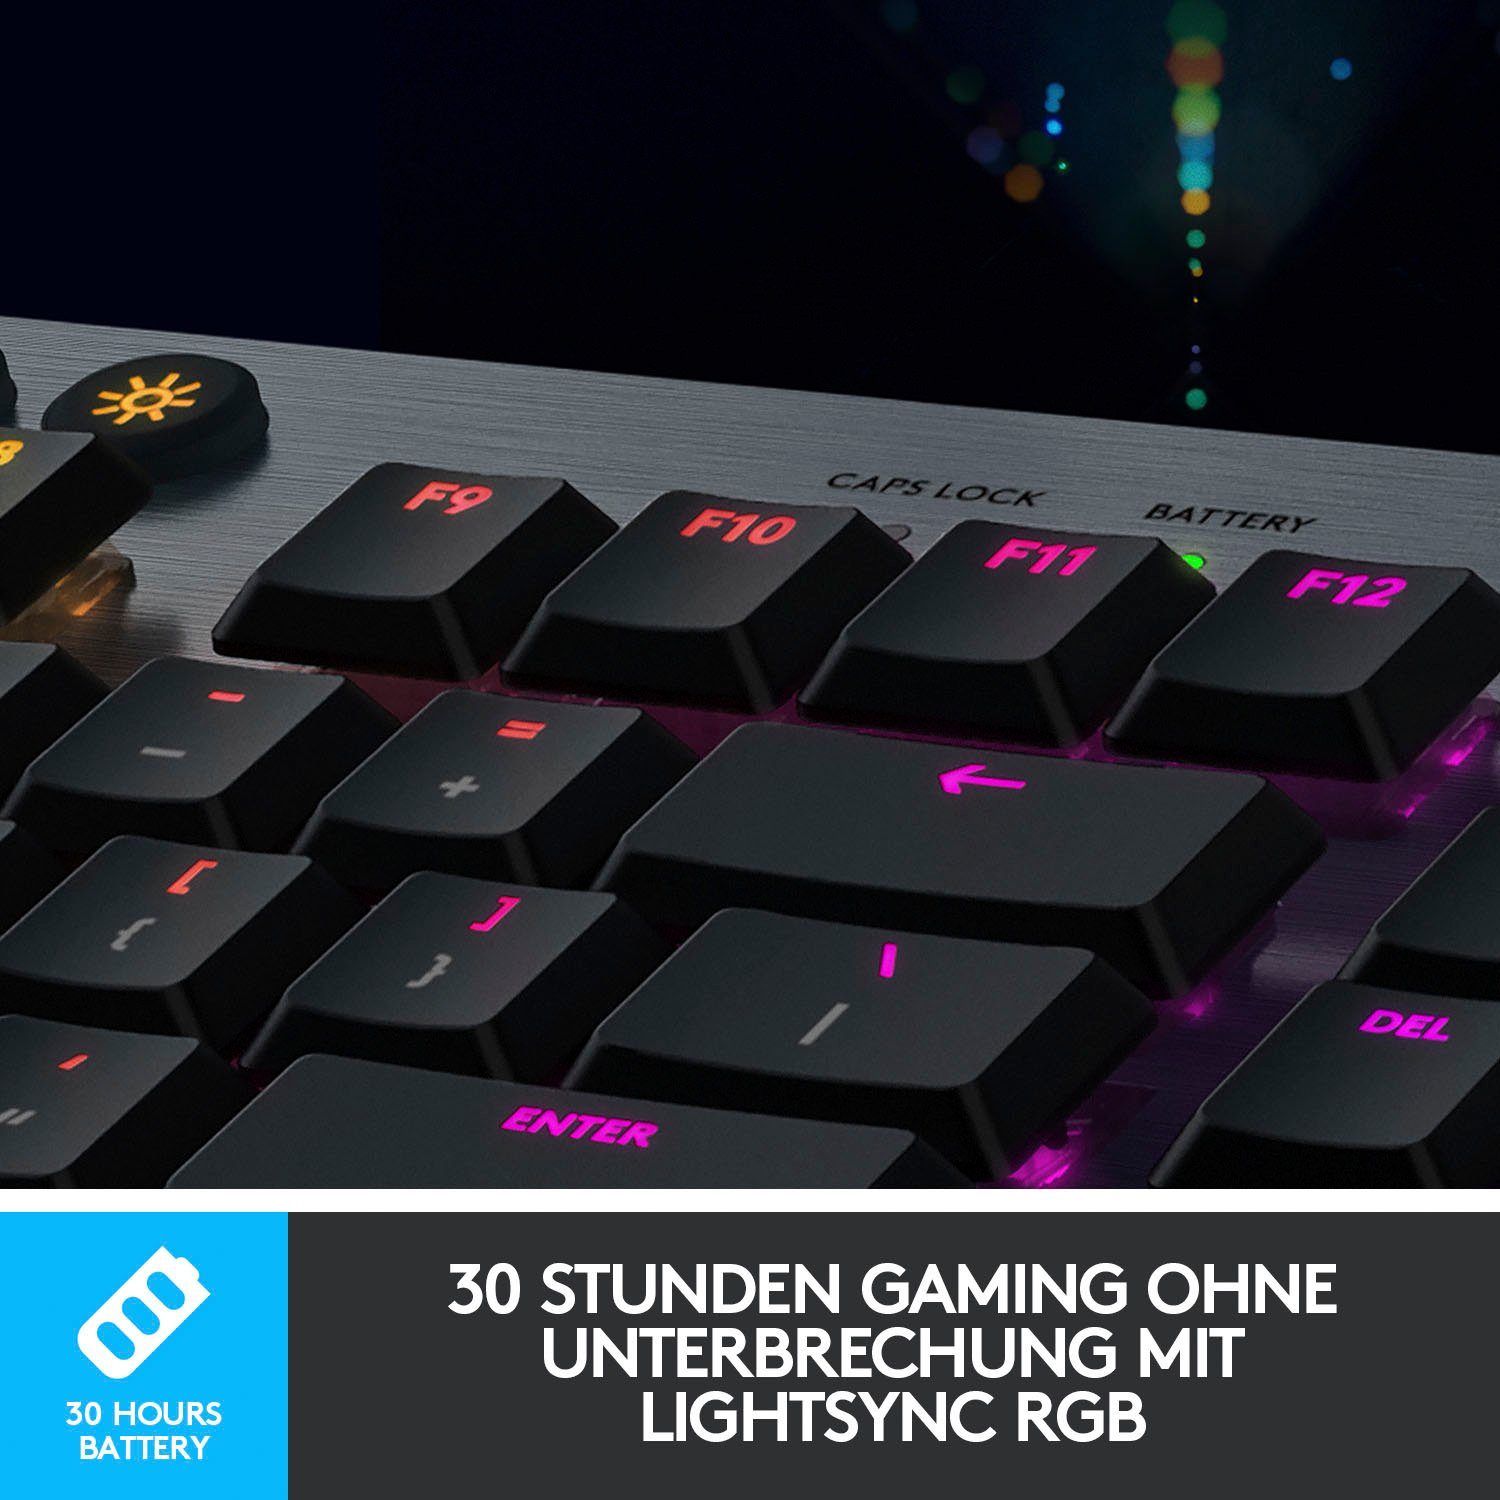 LIGHTSPEED Logitech tactile G915 Gaming-Tastatur G